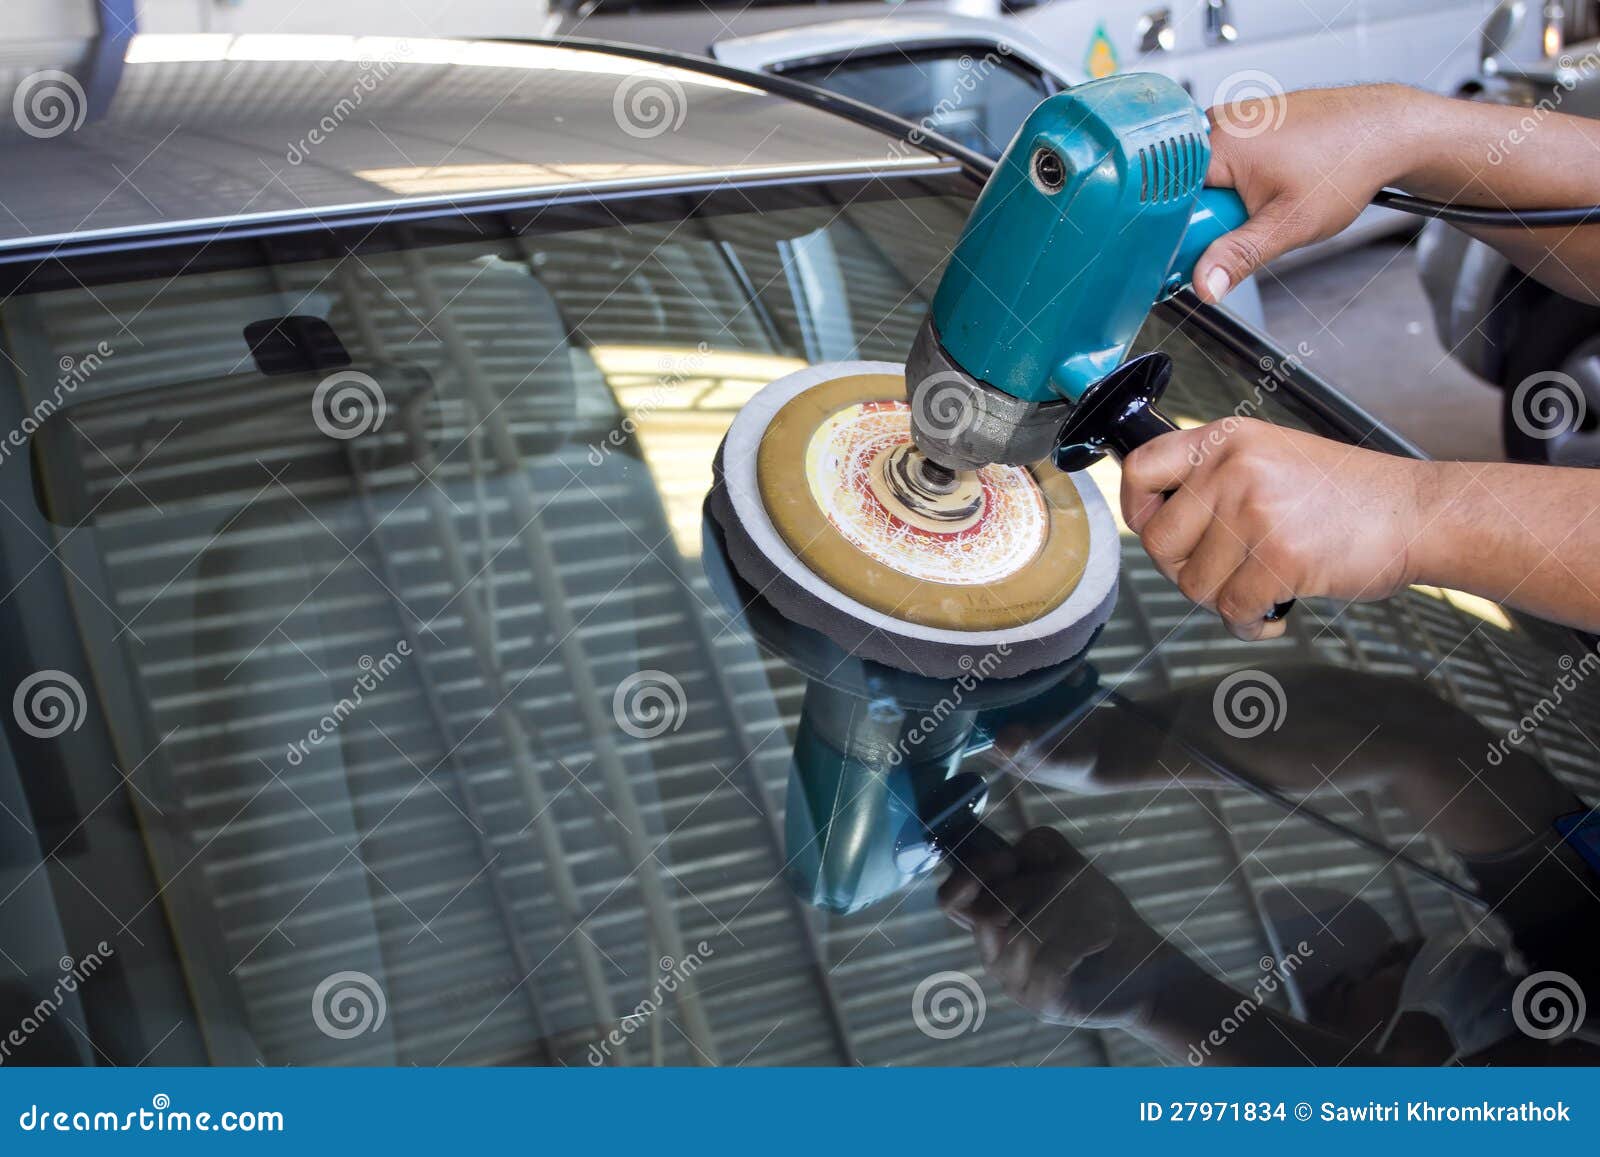 car glass polishing with power buffer machine